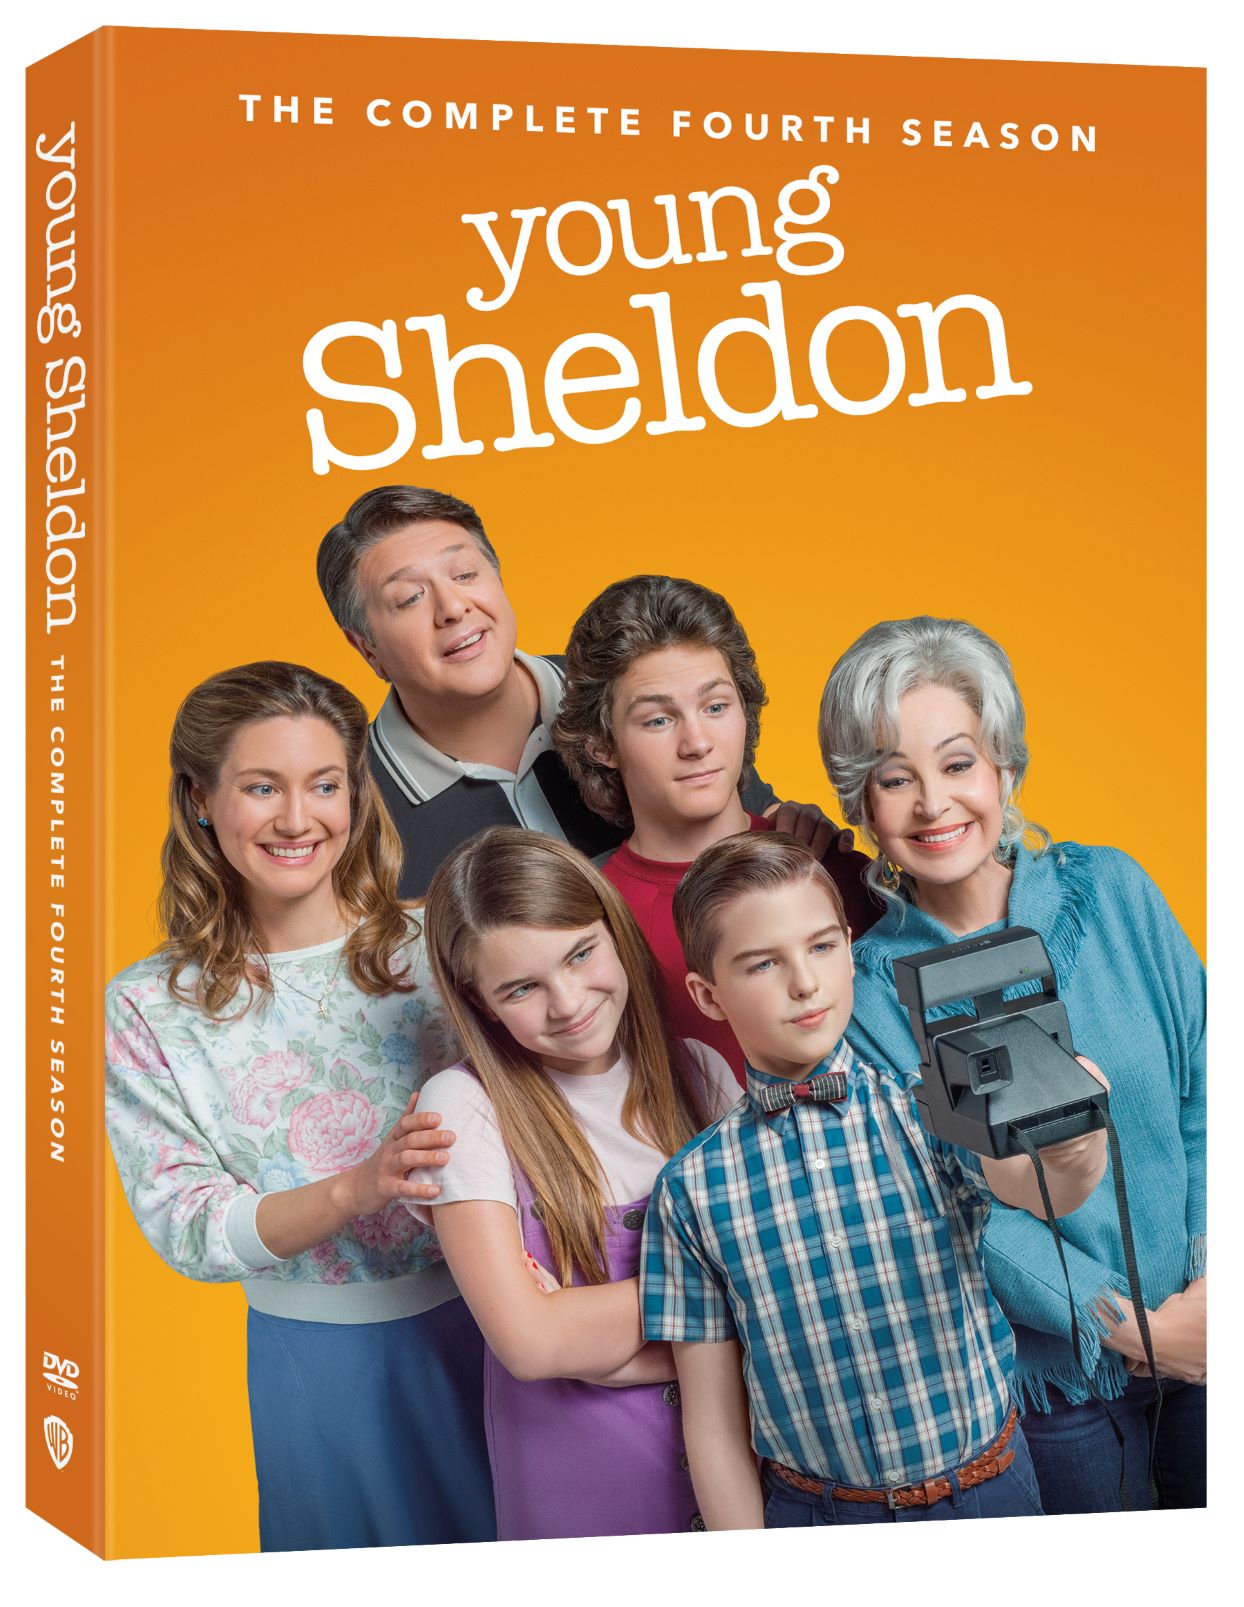 oung Sheldon: The Complete Fourth Season